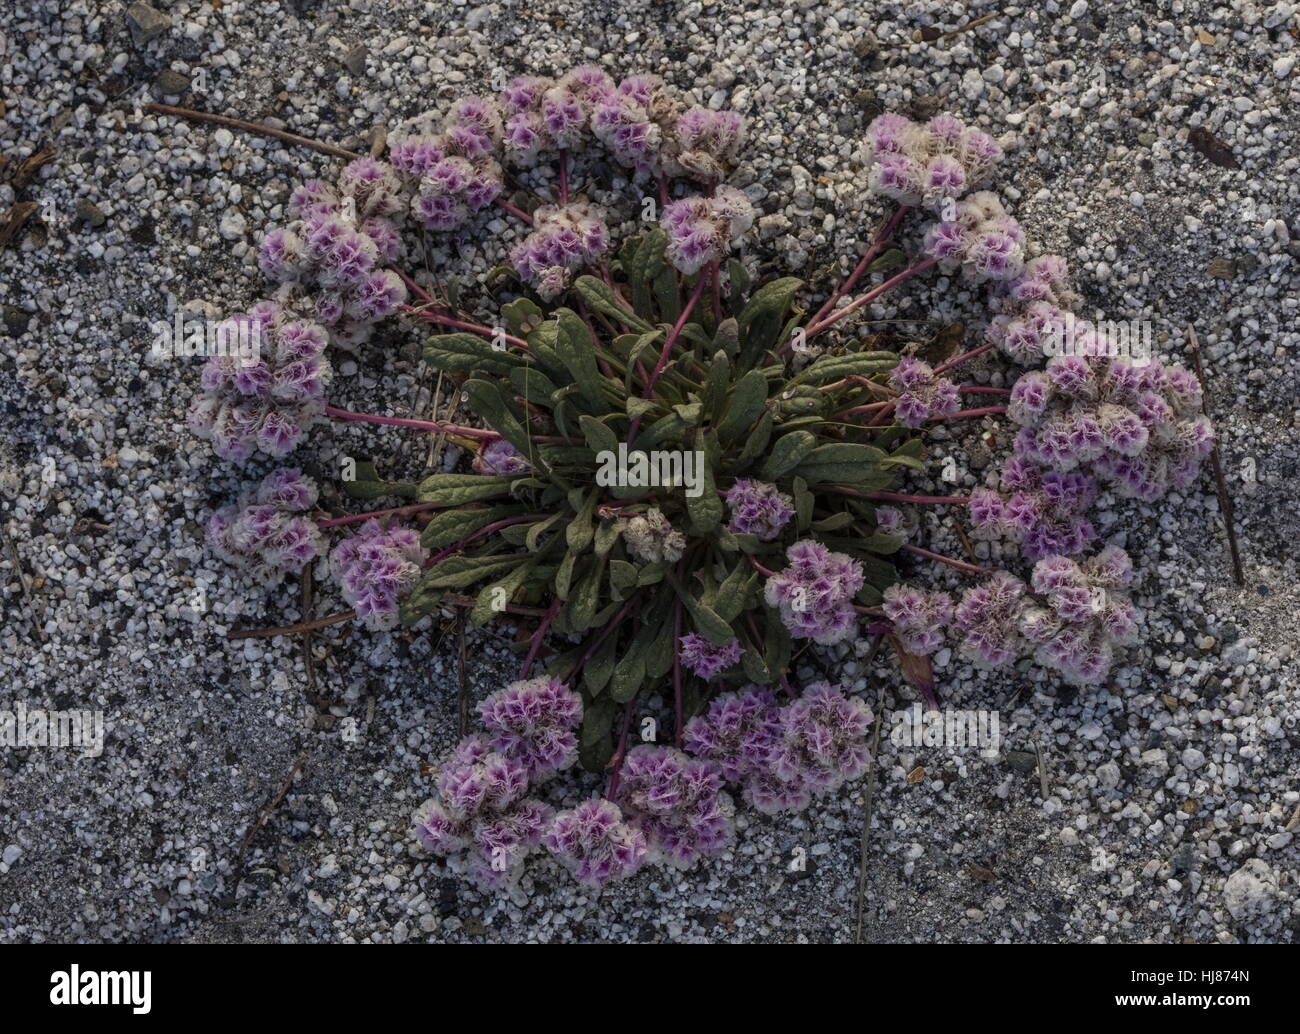 Mount Hood pussypaws, Cistanthe umbellata, or Calyptridium umbellatum, in flower on roadside gravel. Yosemite, California. Stock Photo